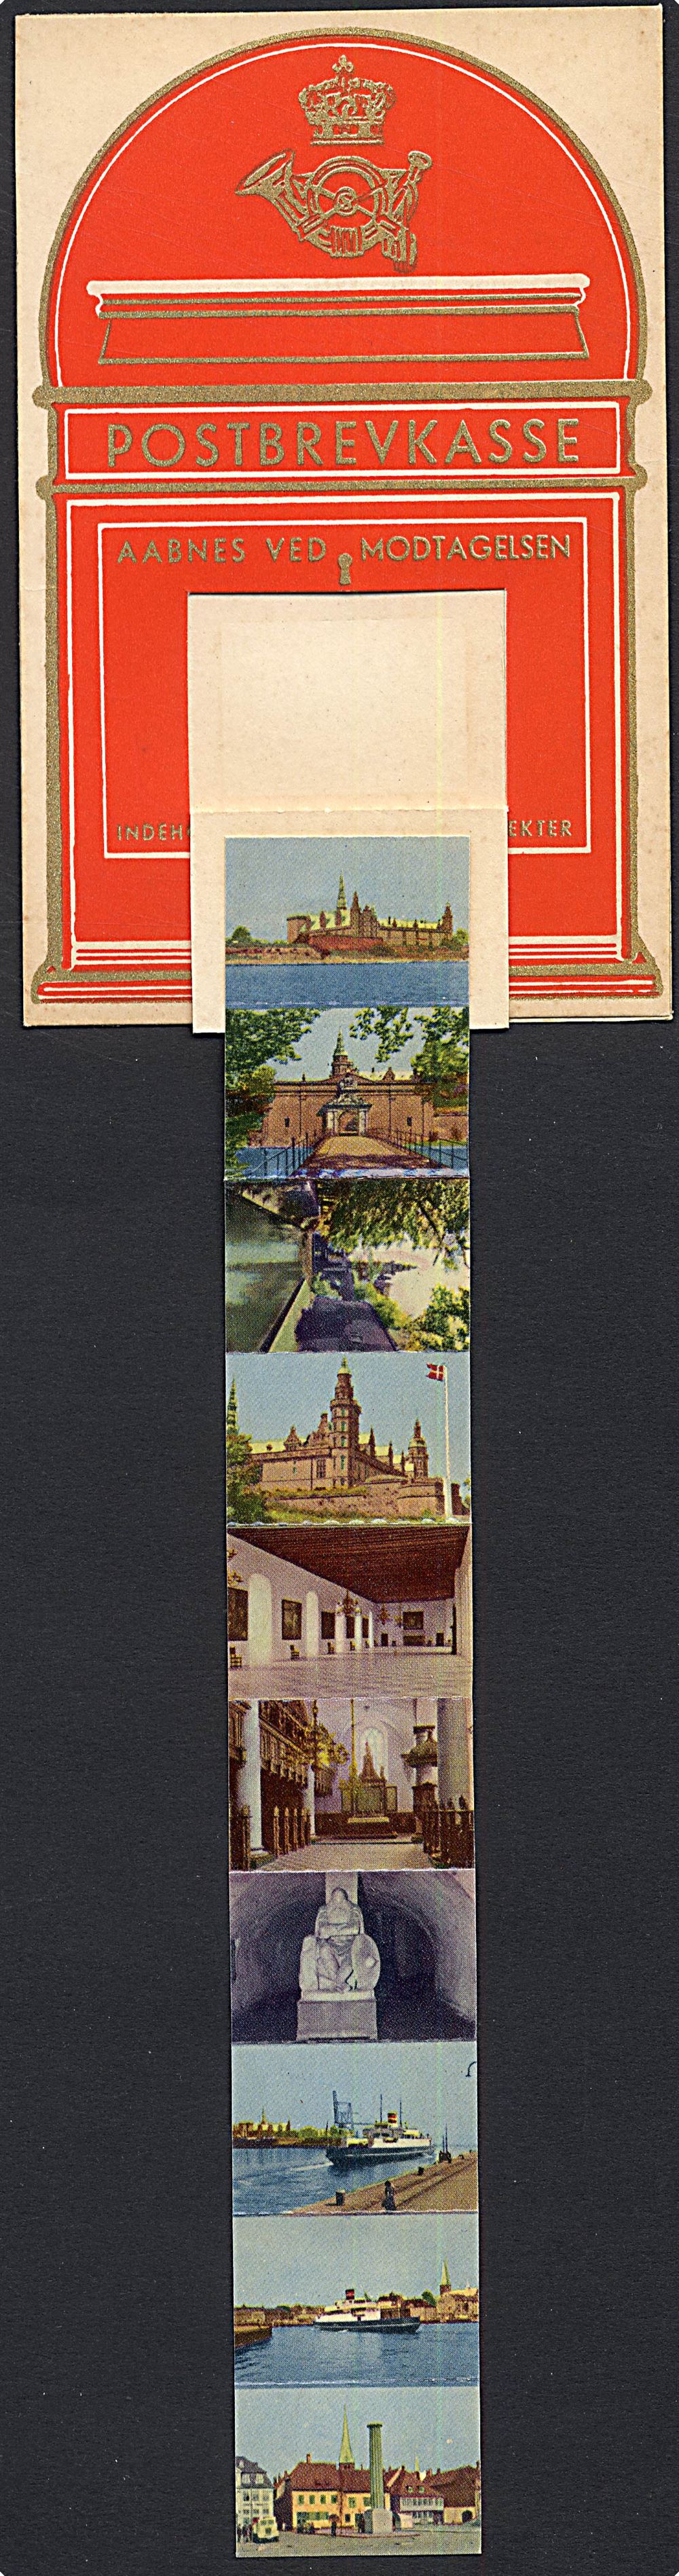 Postkasse med Helsingør Stenders no 2 3000